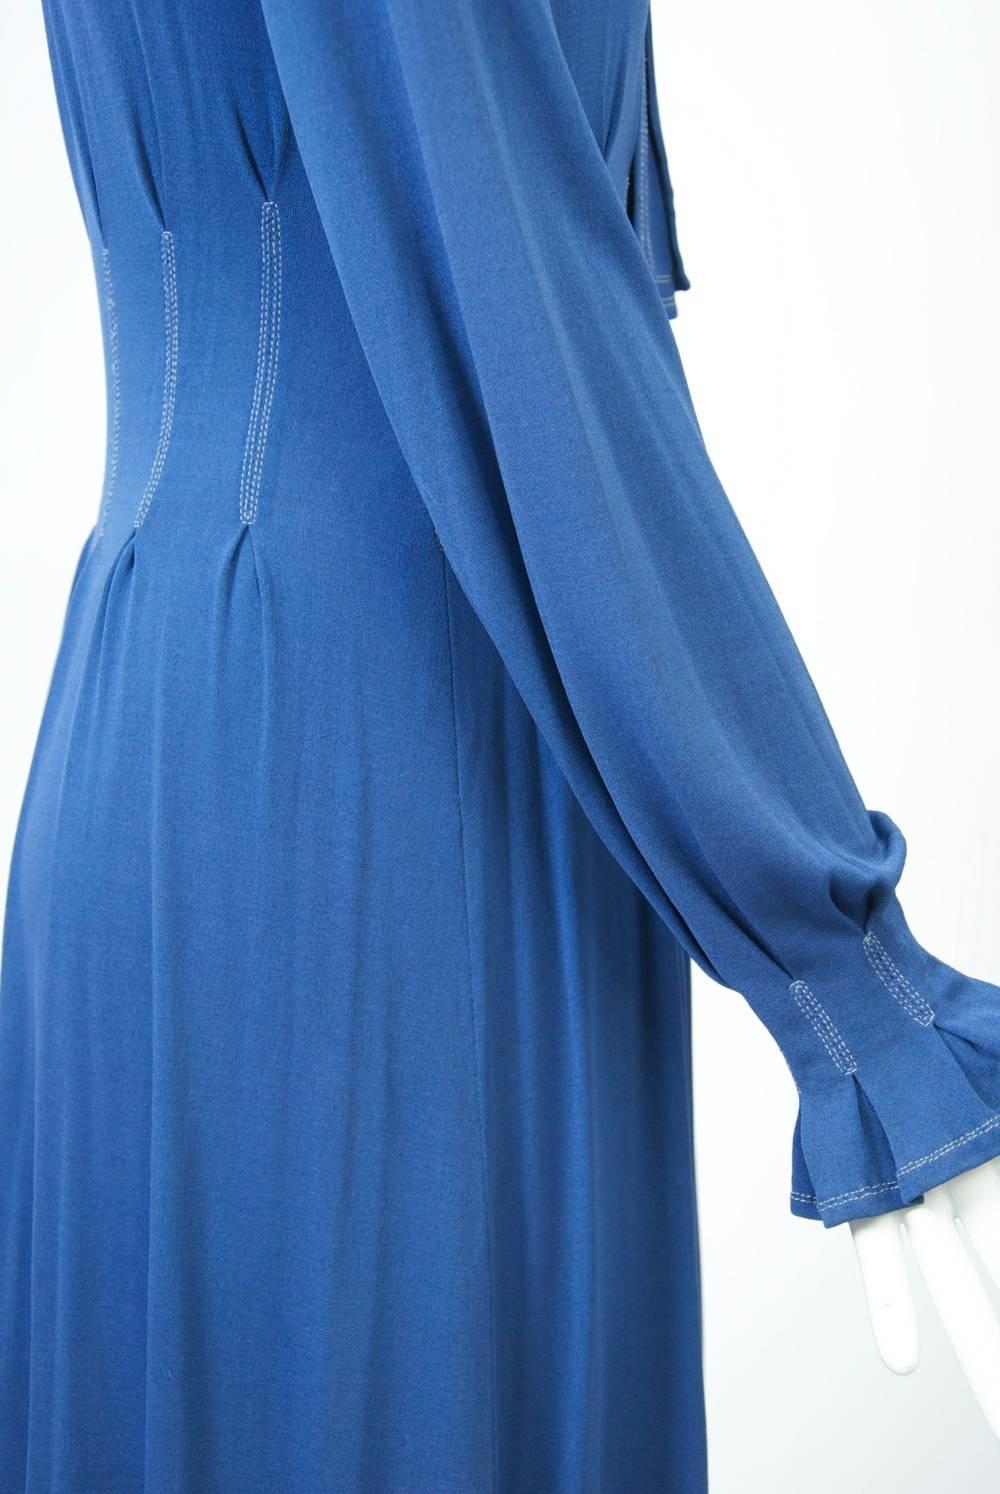 Jean Muir Blue Dress 2